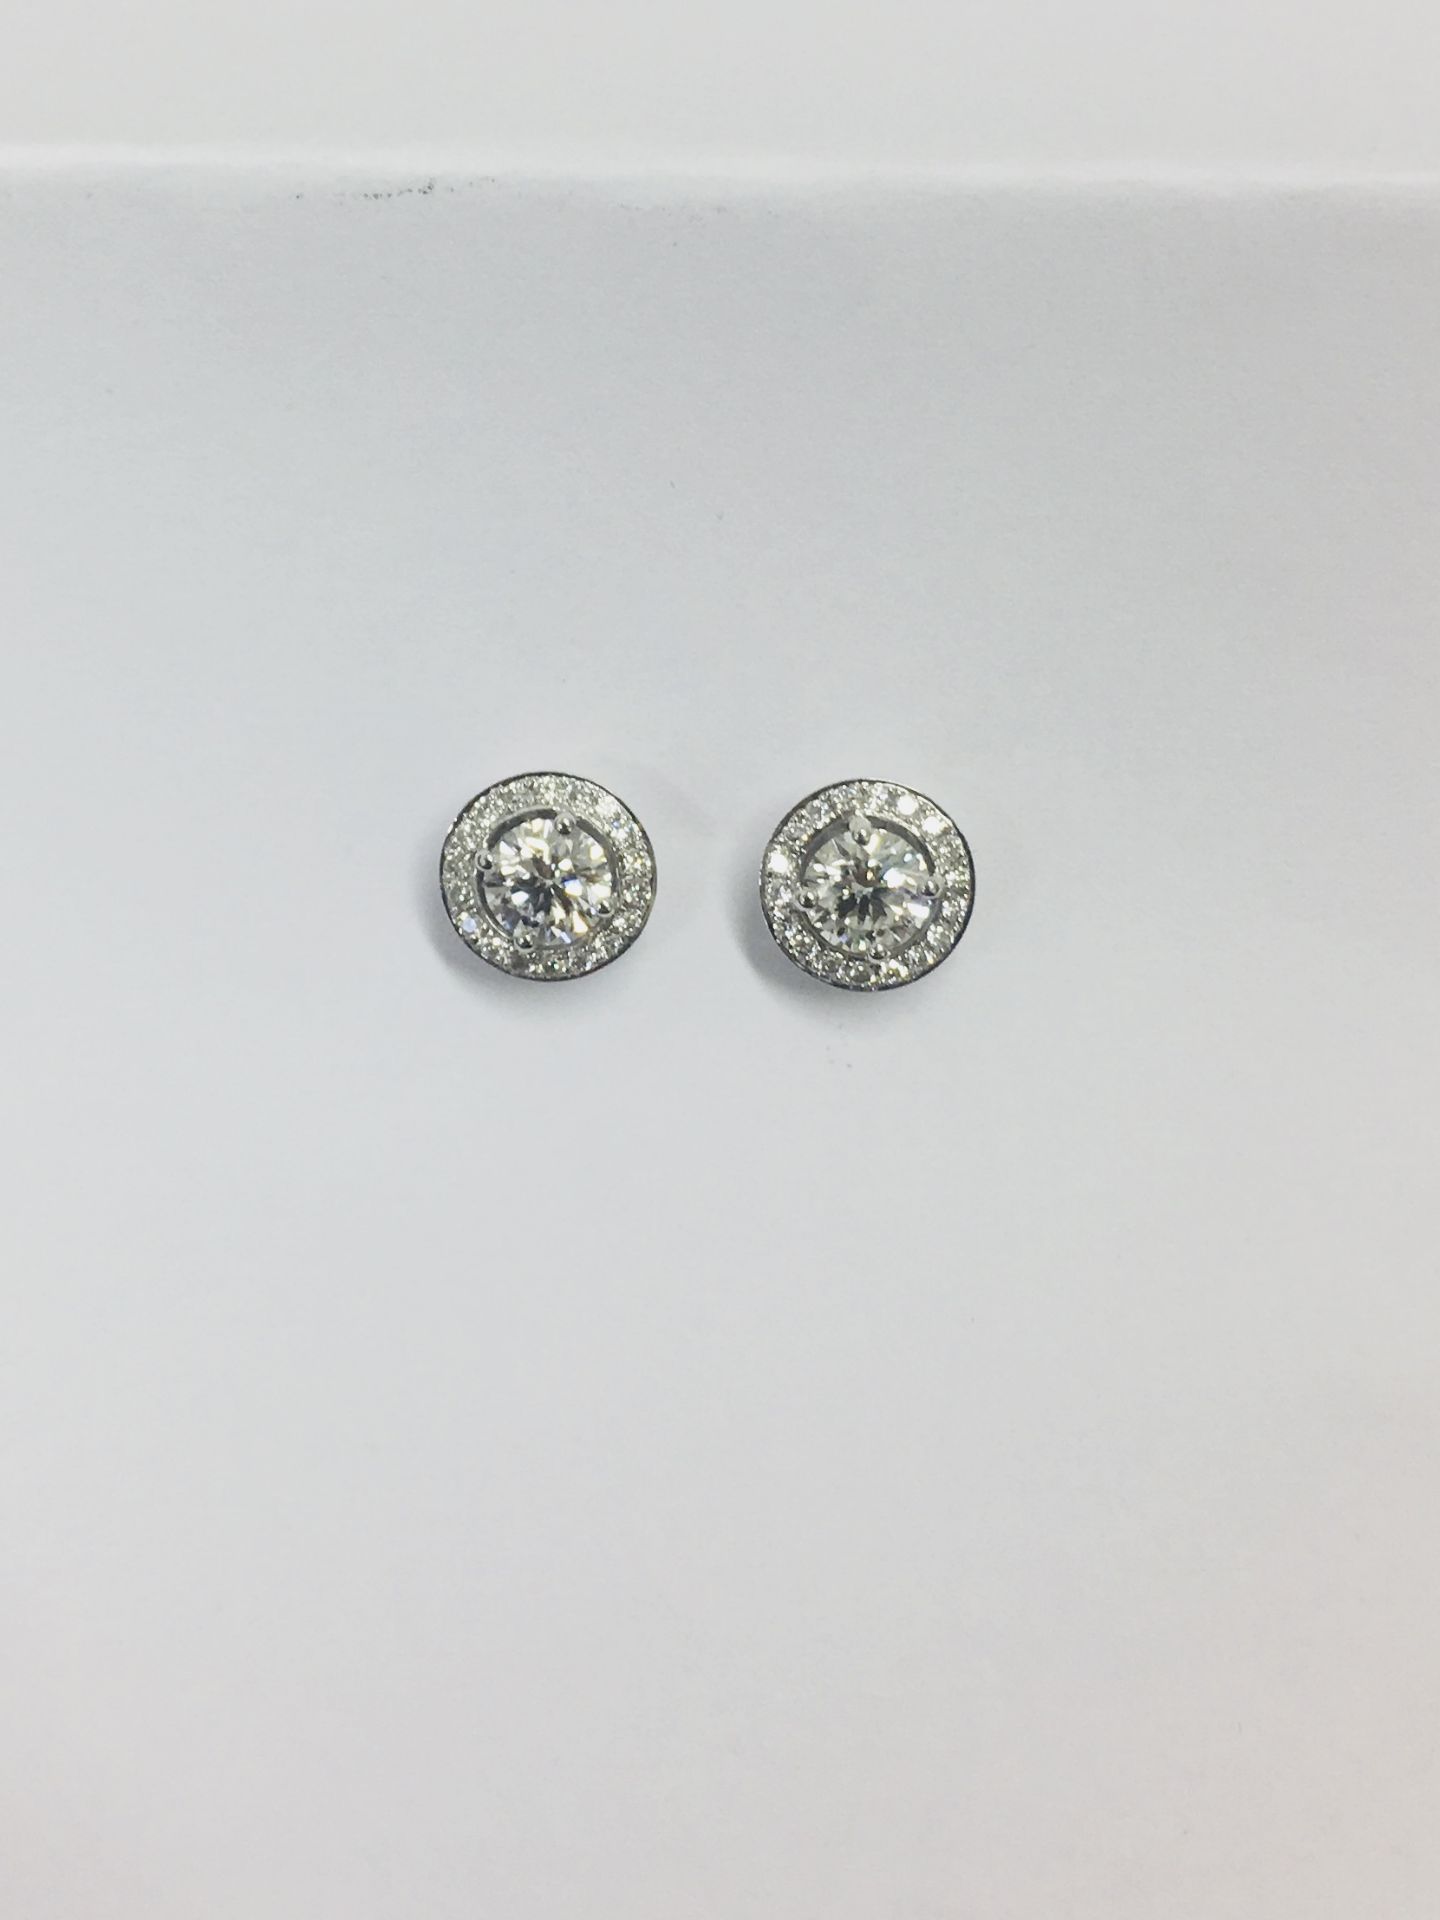 18ct white gold diamond Halo stud earrings ,0.92ct h colour vs grade diamonds surrounded by diamonds - Image 4 of 4